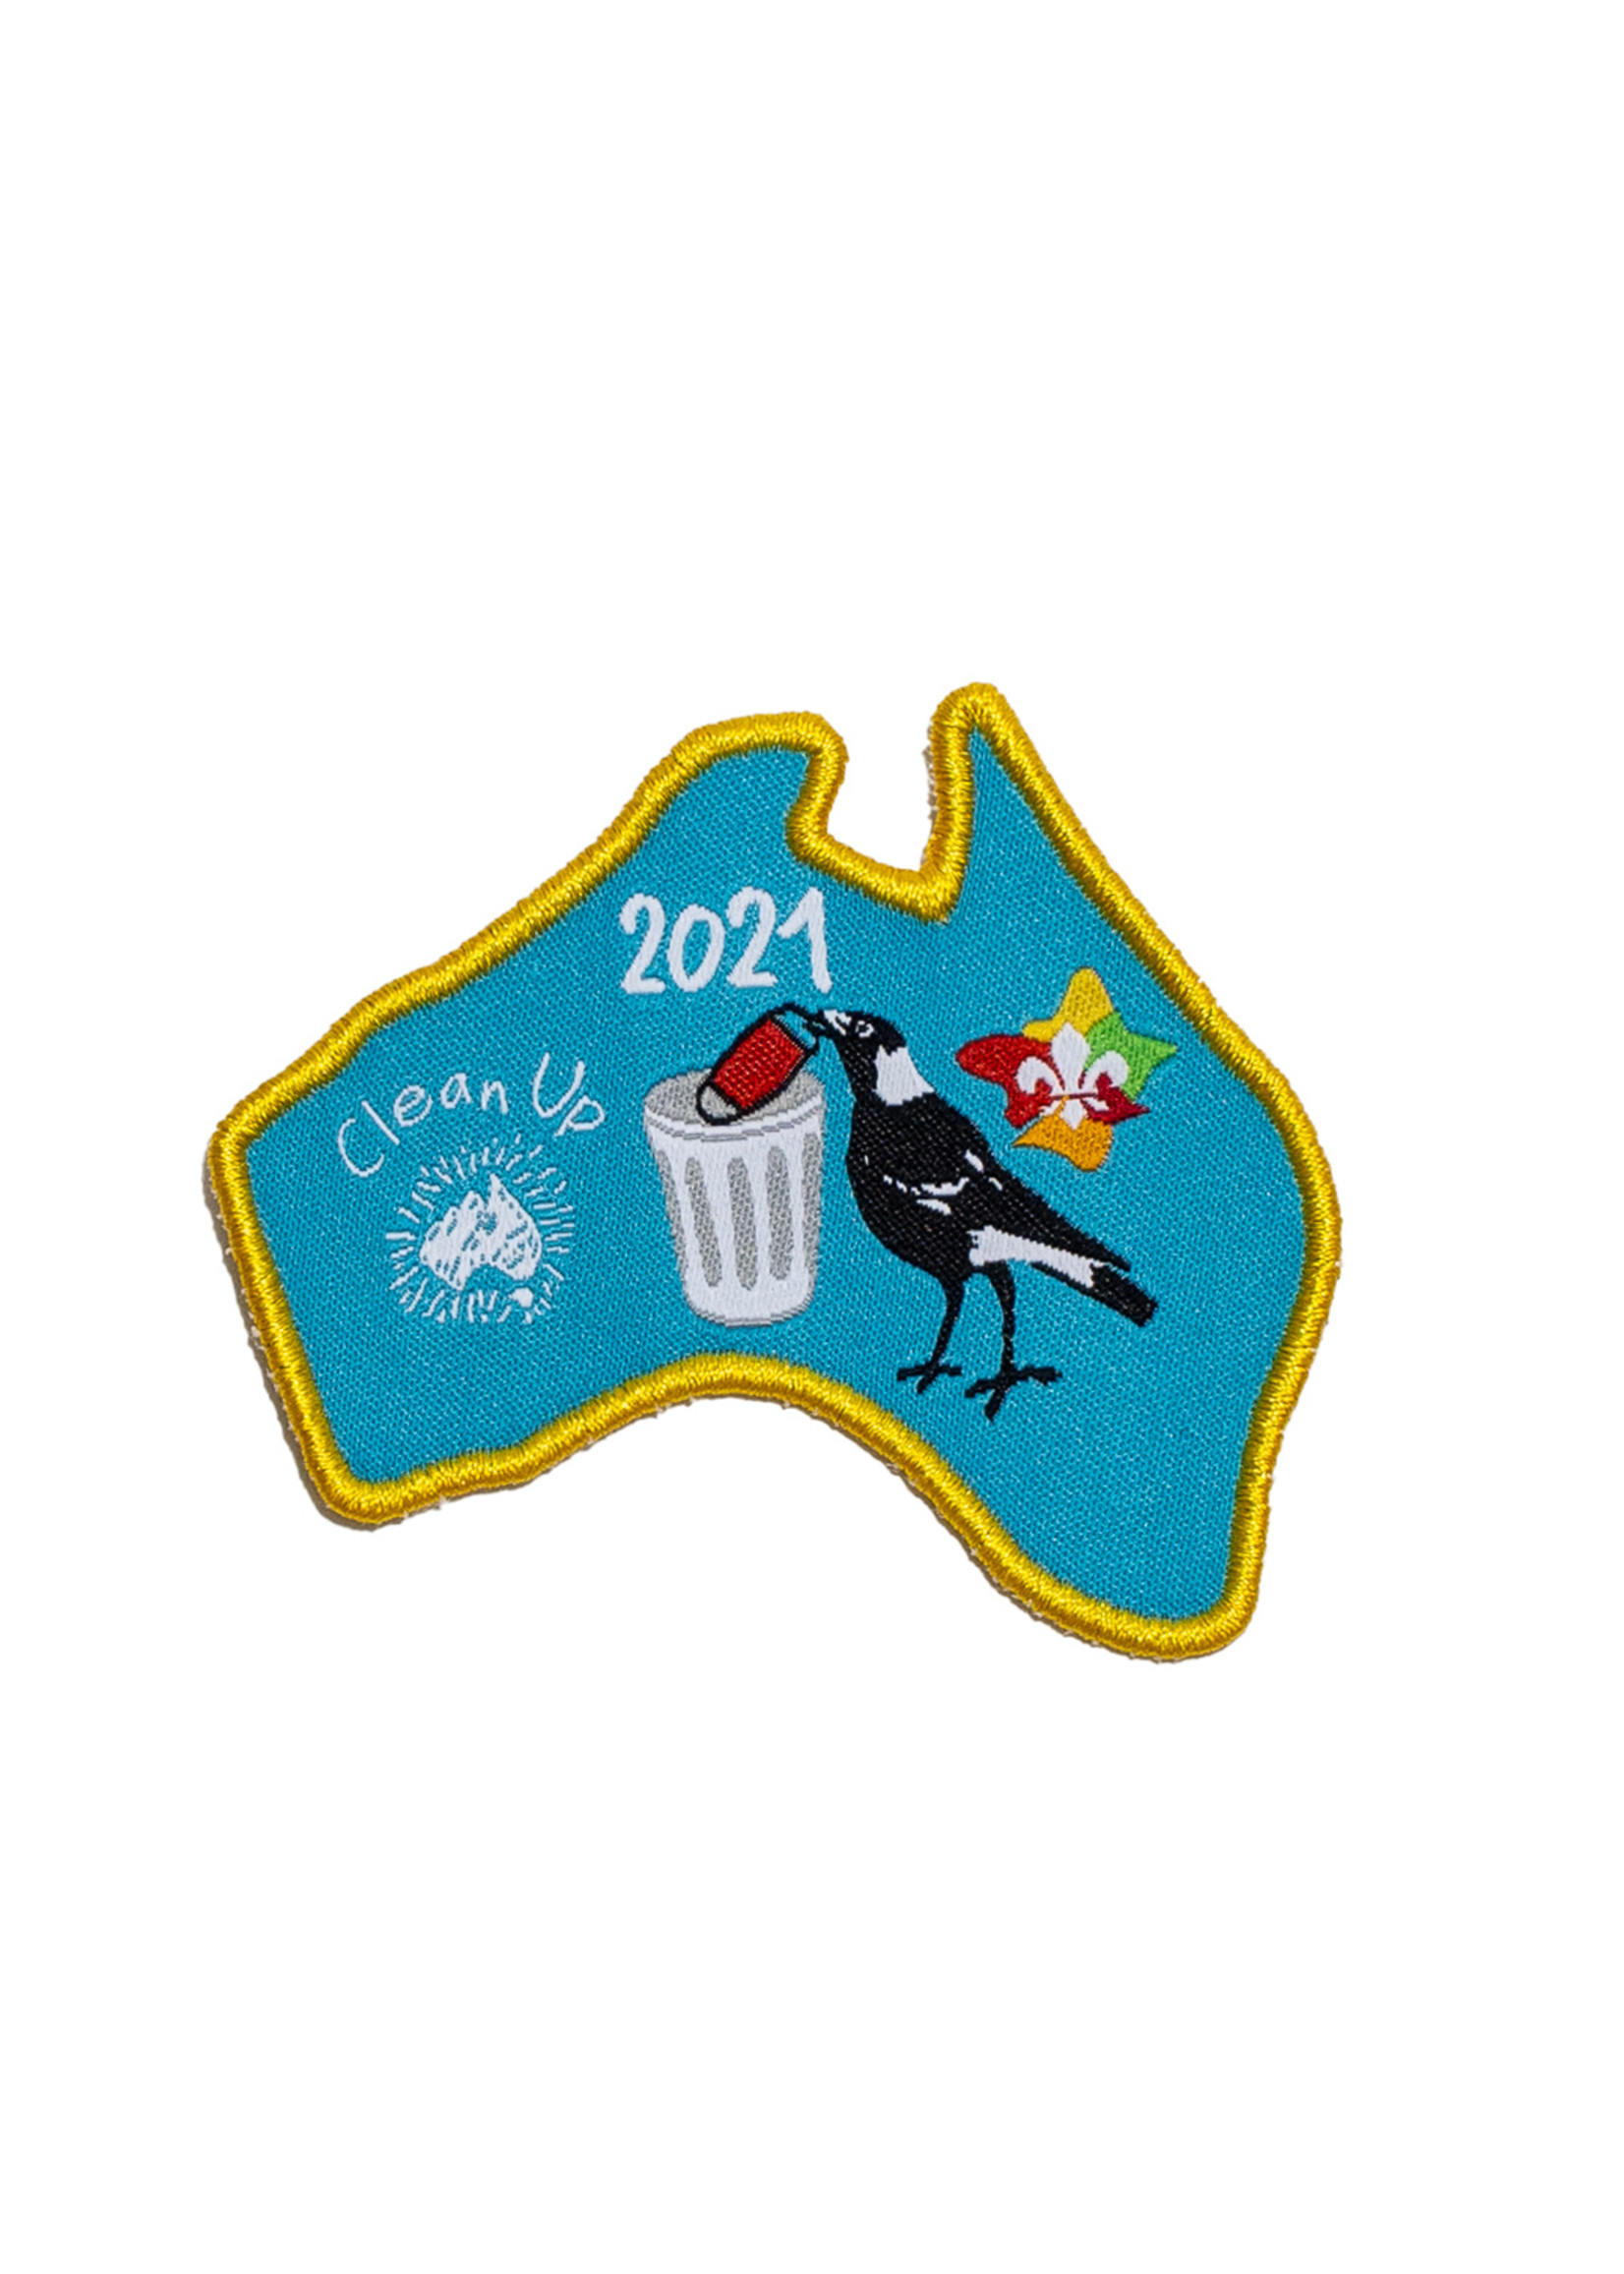 2021 Clean Up Australia Badge